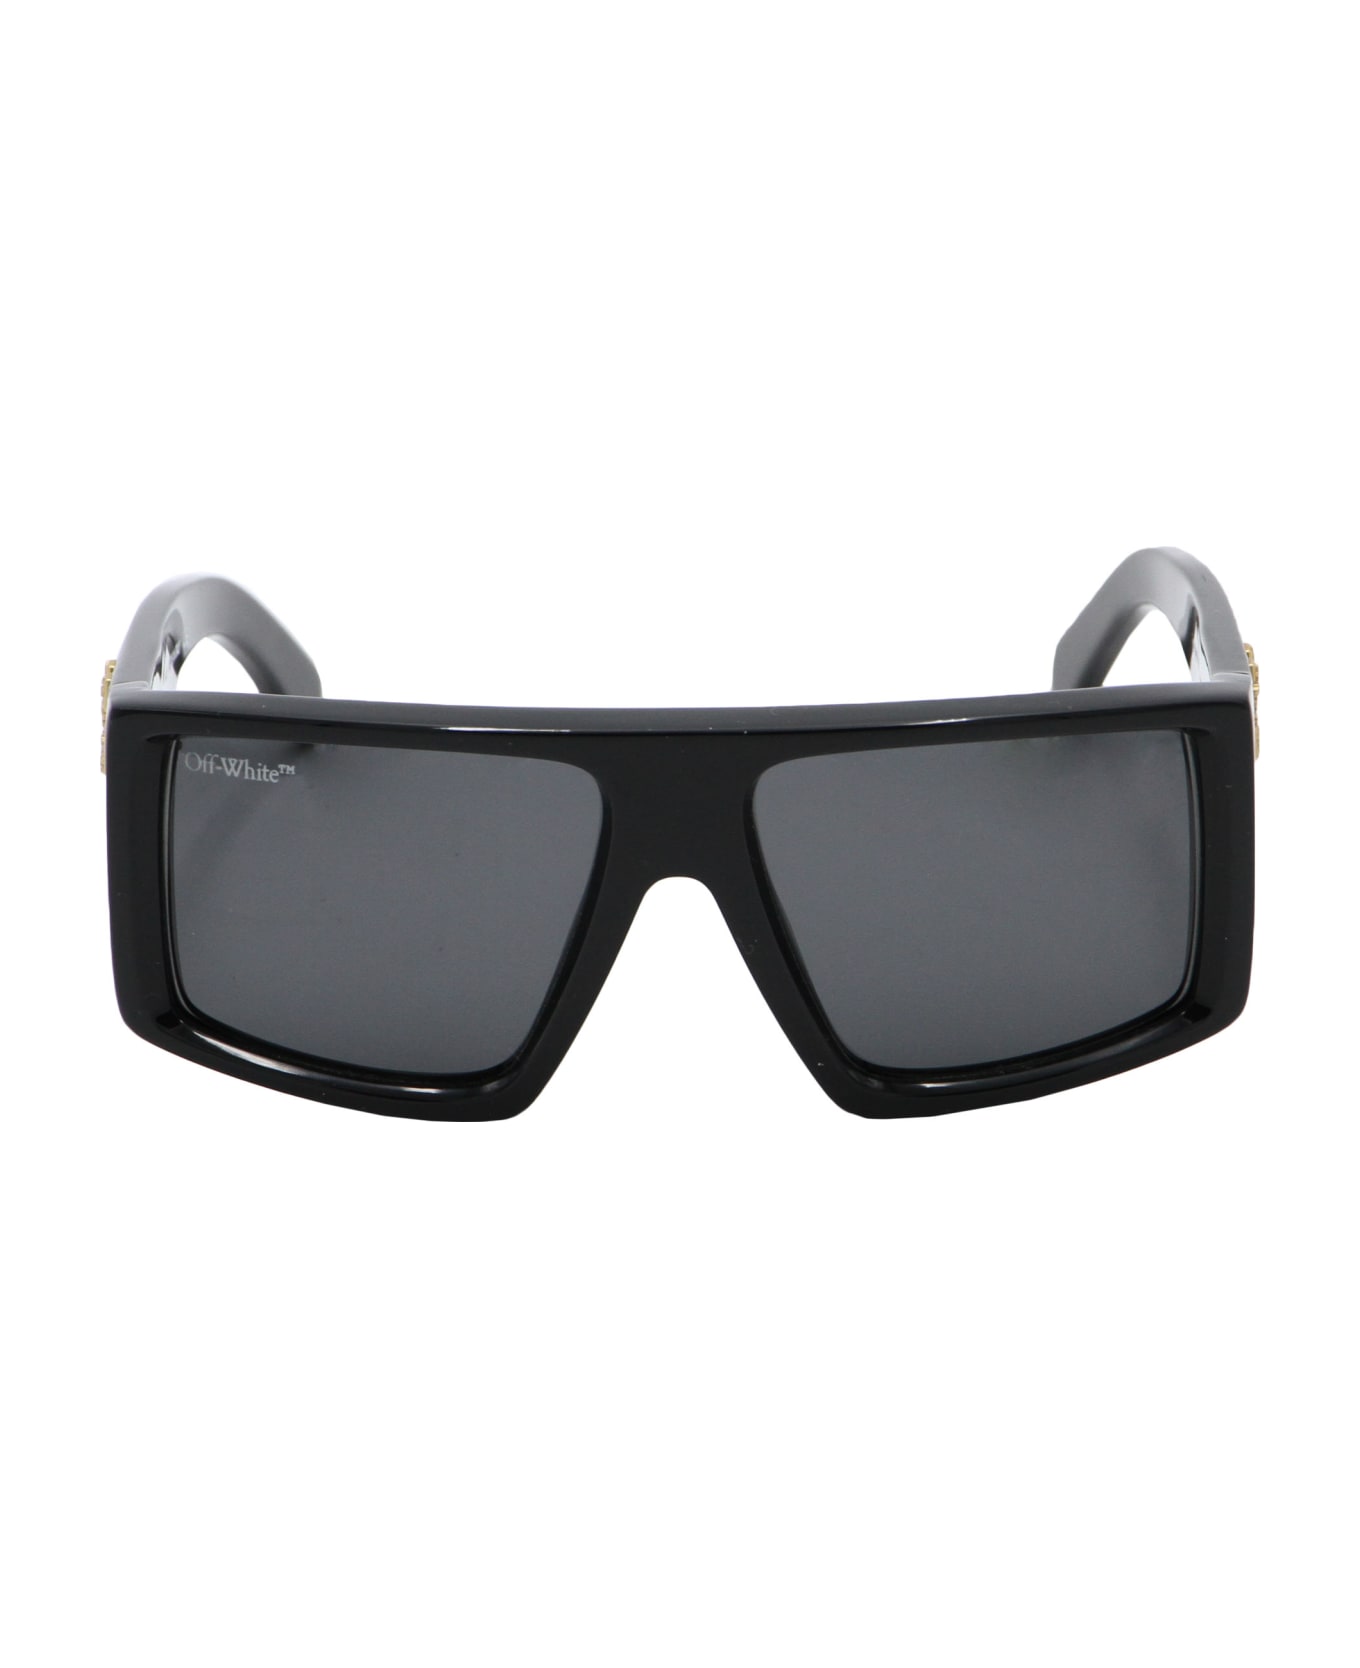 Off-White Squared Sunglasses - black